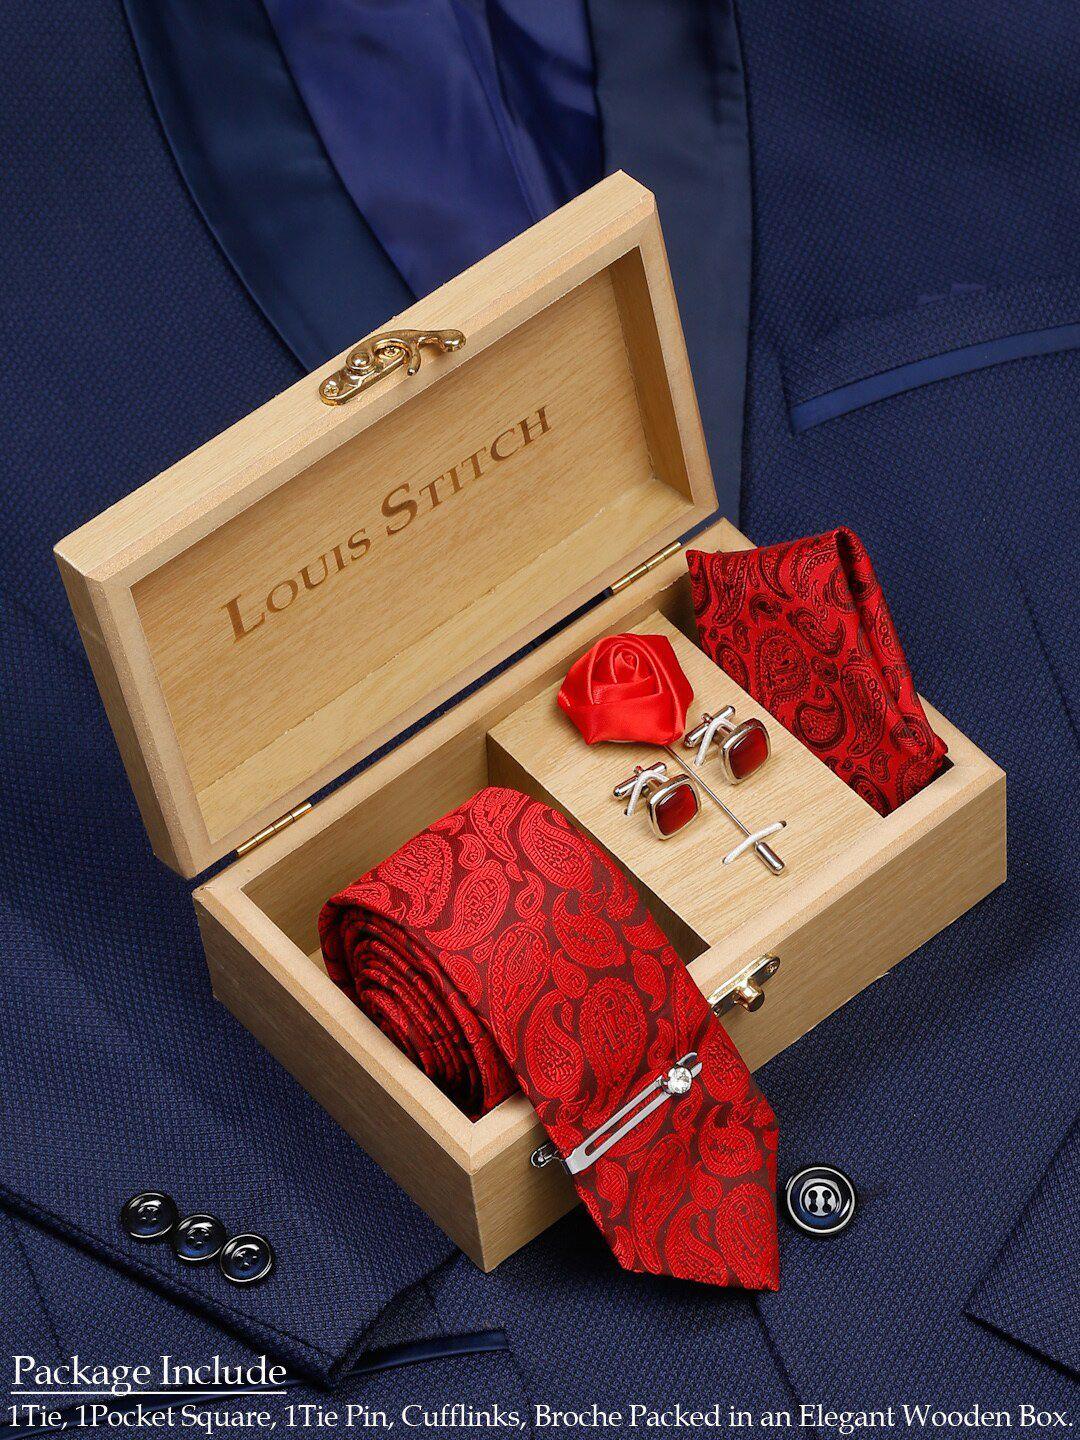 louis stitch men red accessory gift set